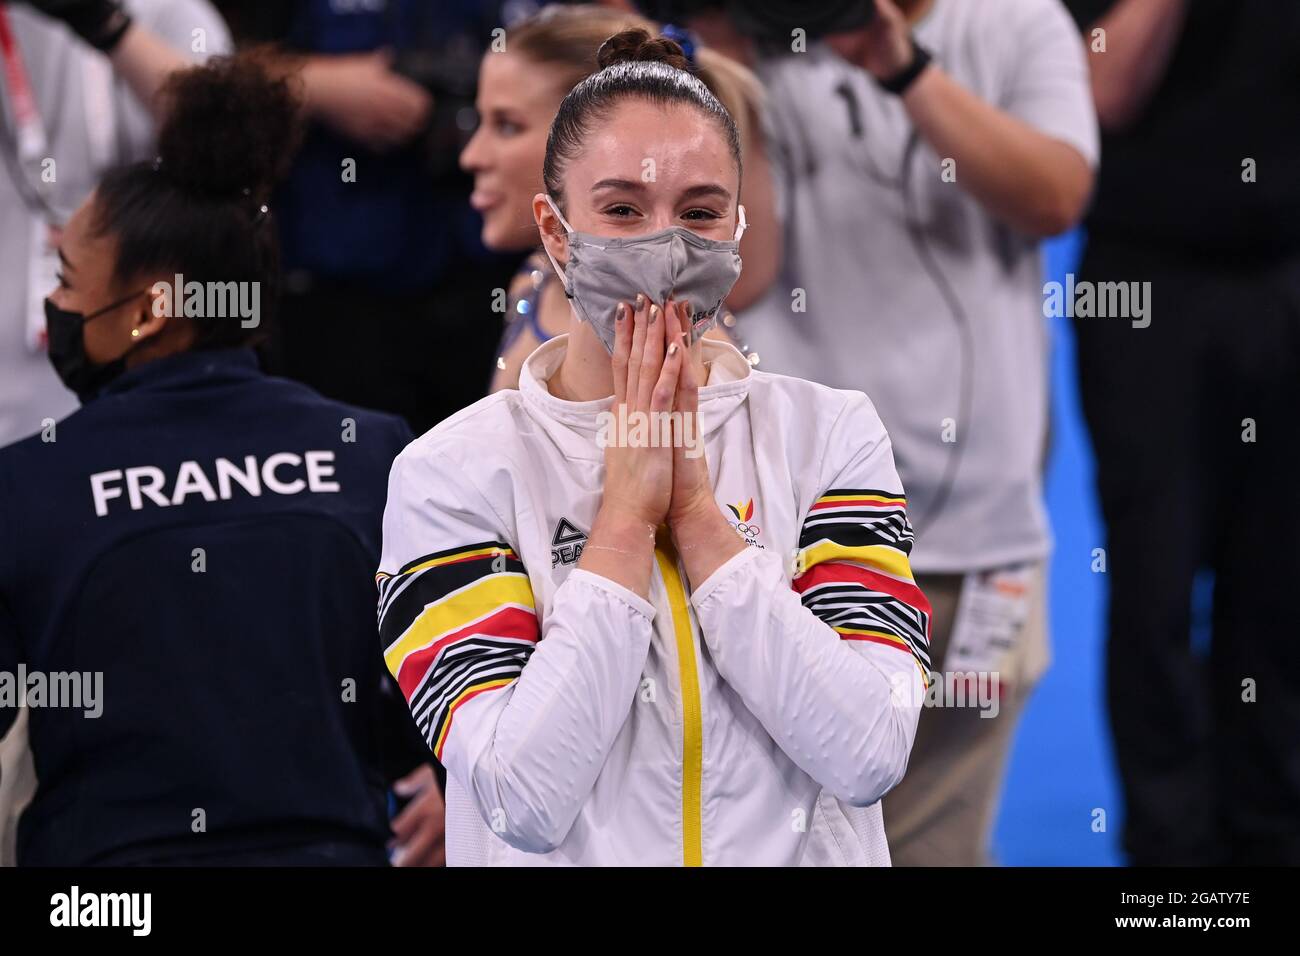 Belgian Gymnast Nina Derwael Celebrates After Winning The Individual Uneven Bars Final Event In